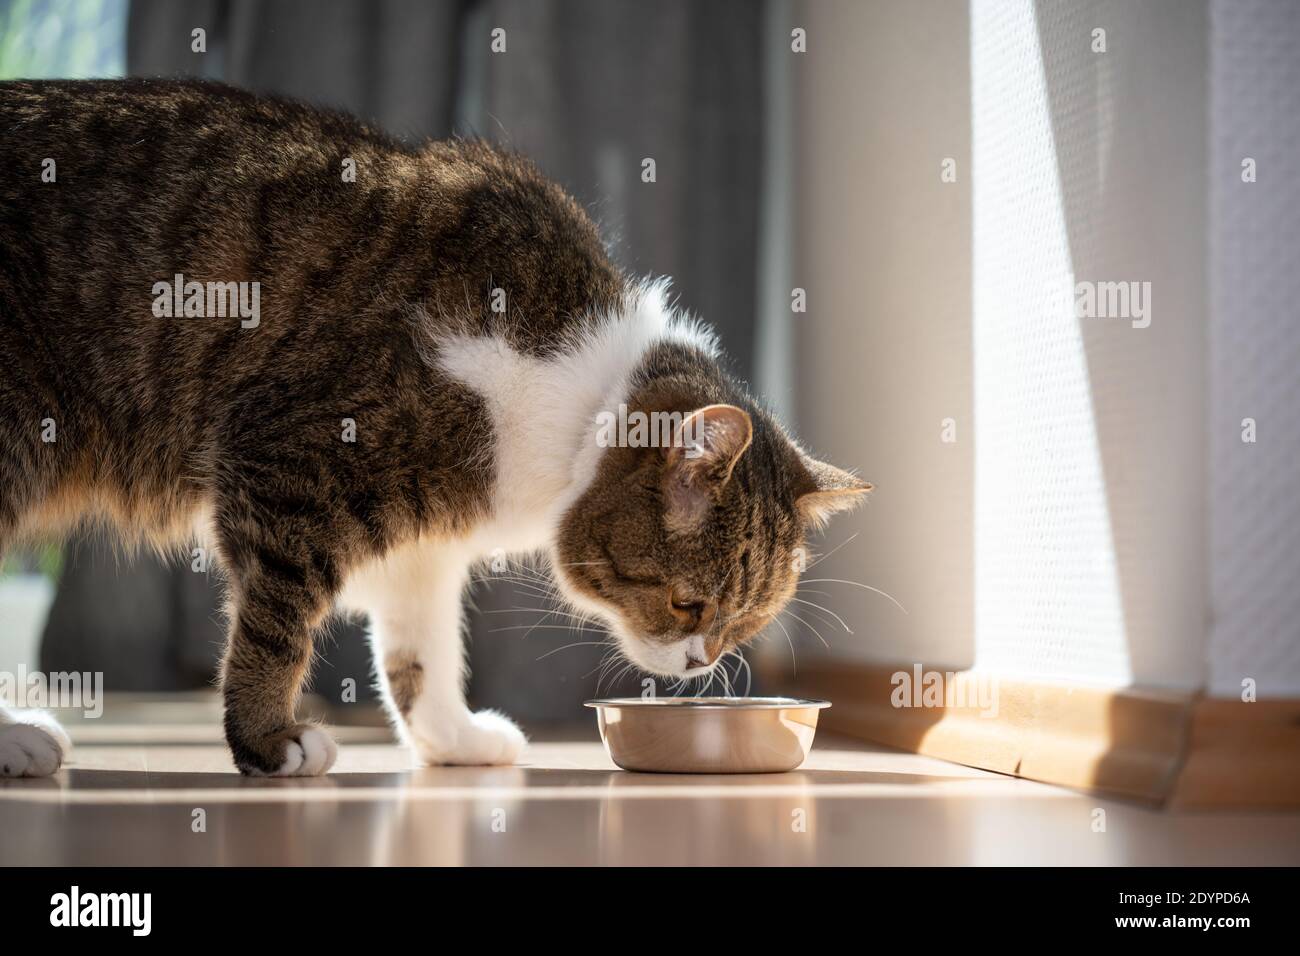 tabby white british shorthair cat eatnig pet food from bowl on the floor Stock Photo